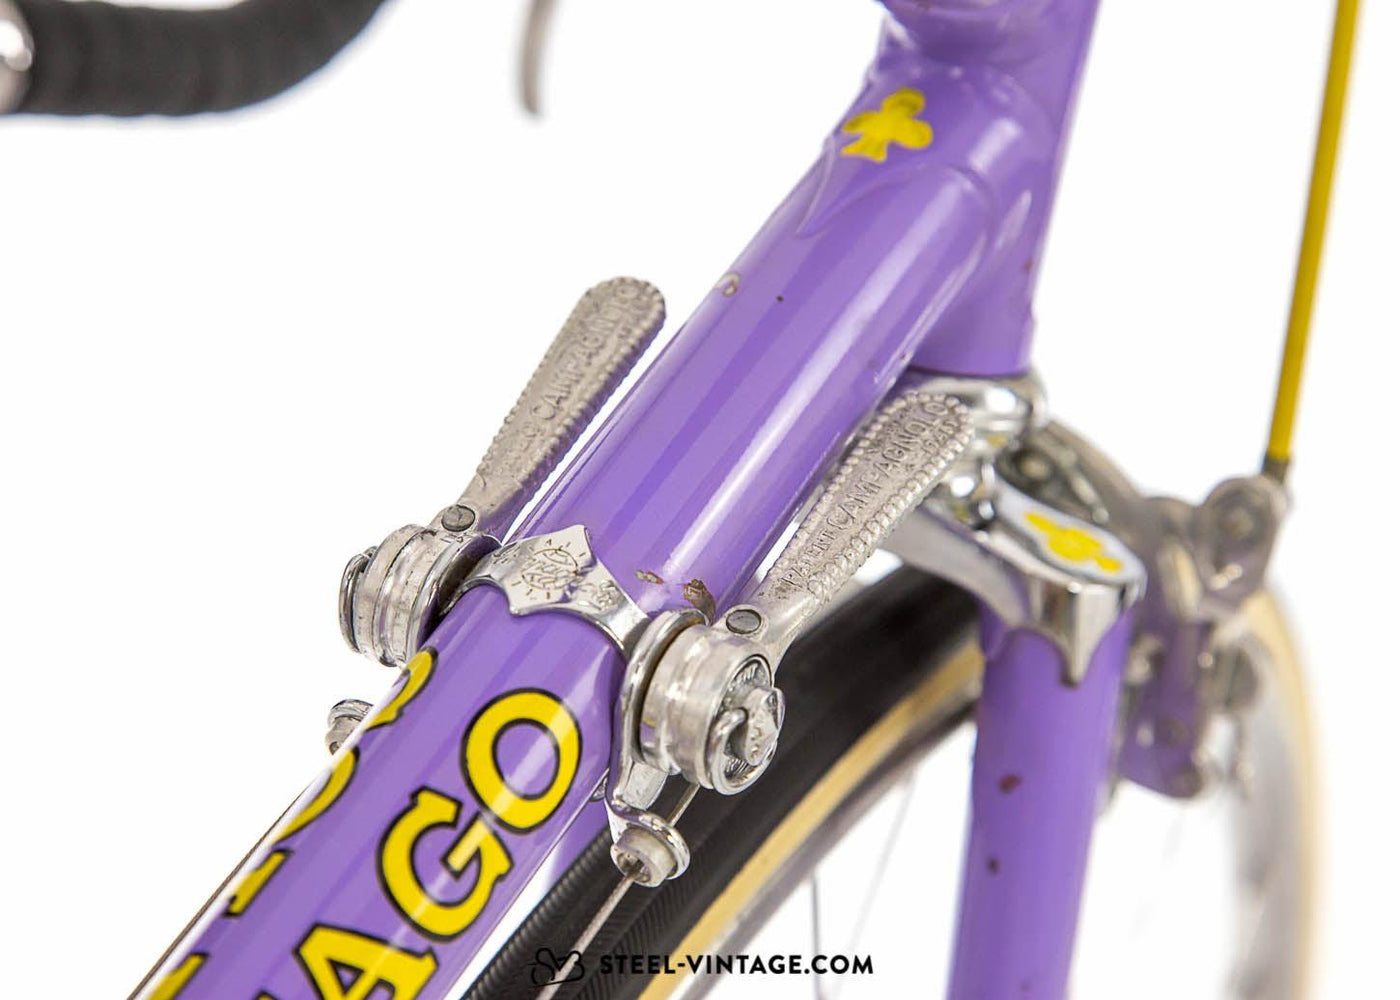 Colnago Super Classic Road Bike 1973 - Steel Vintage Bikes